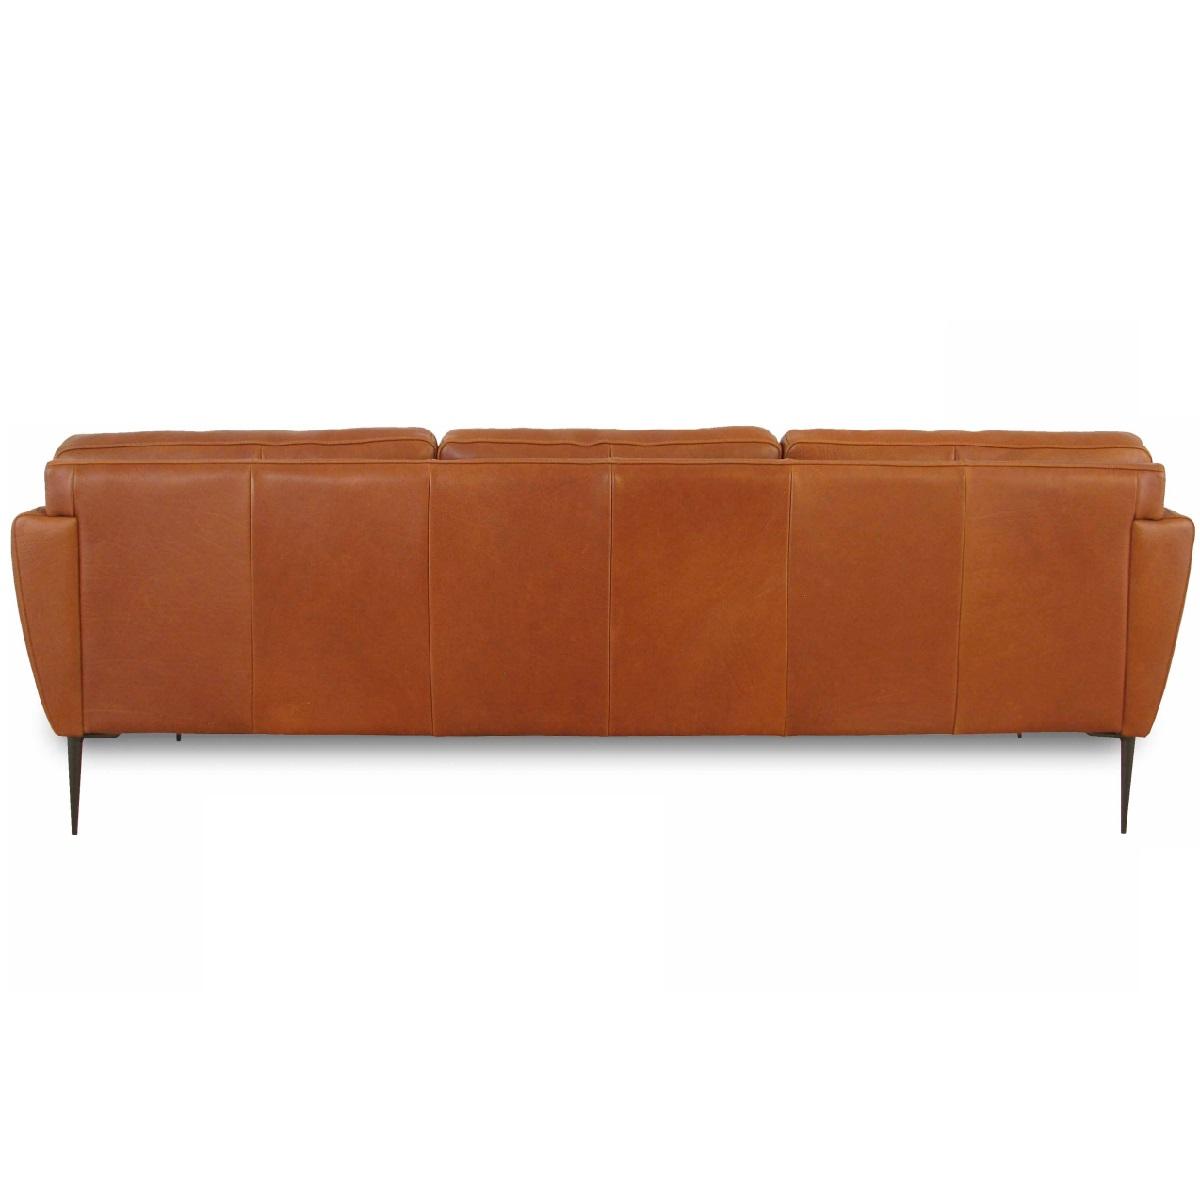 Giovanni Extra Large Sofa